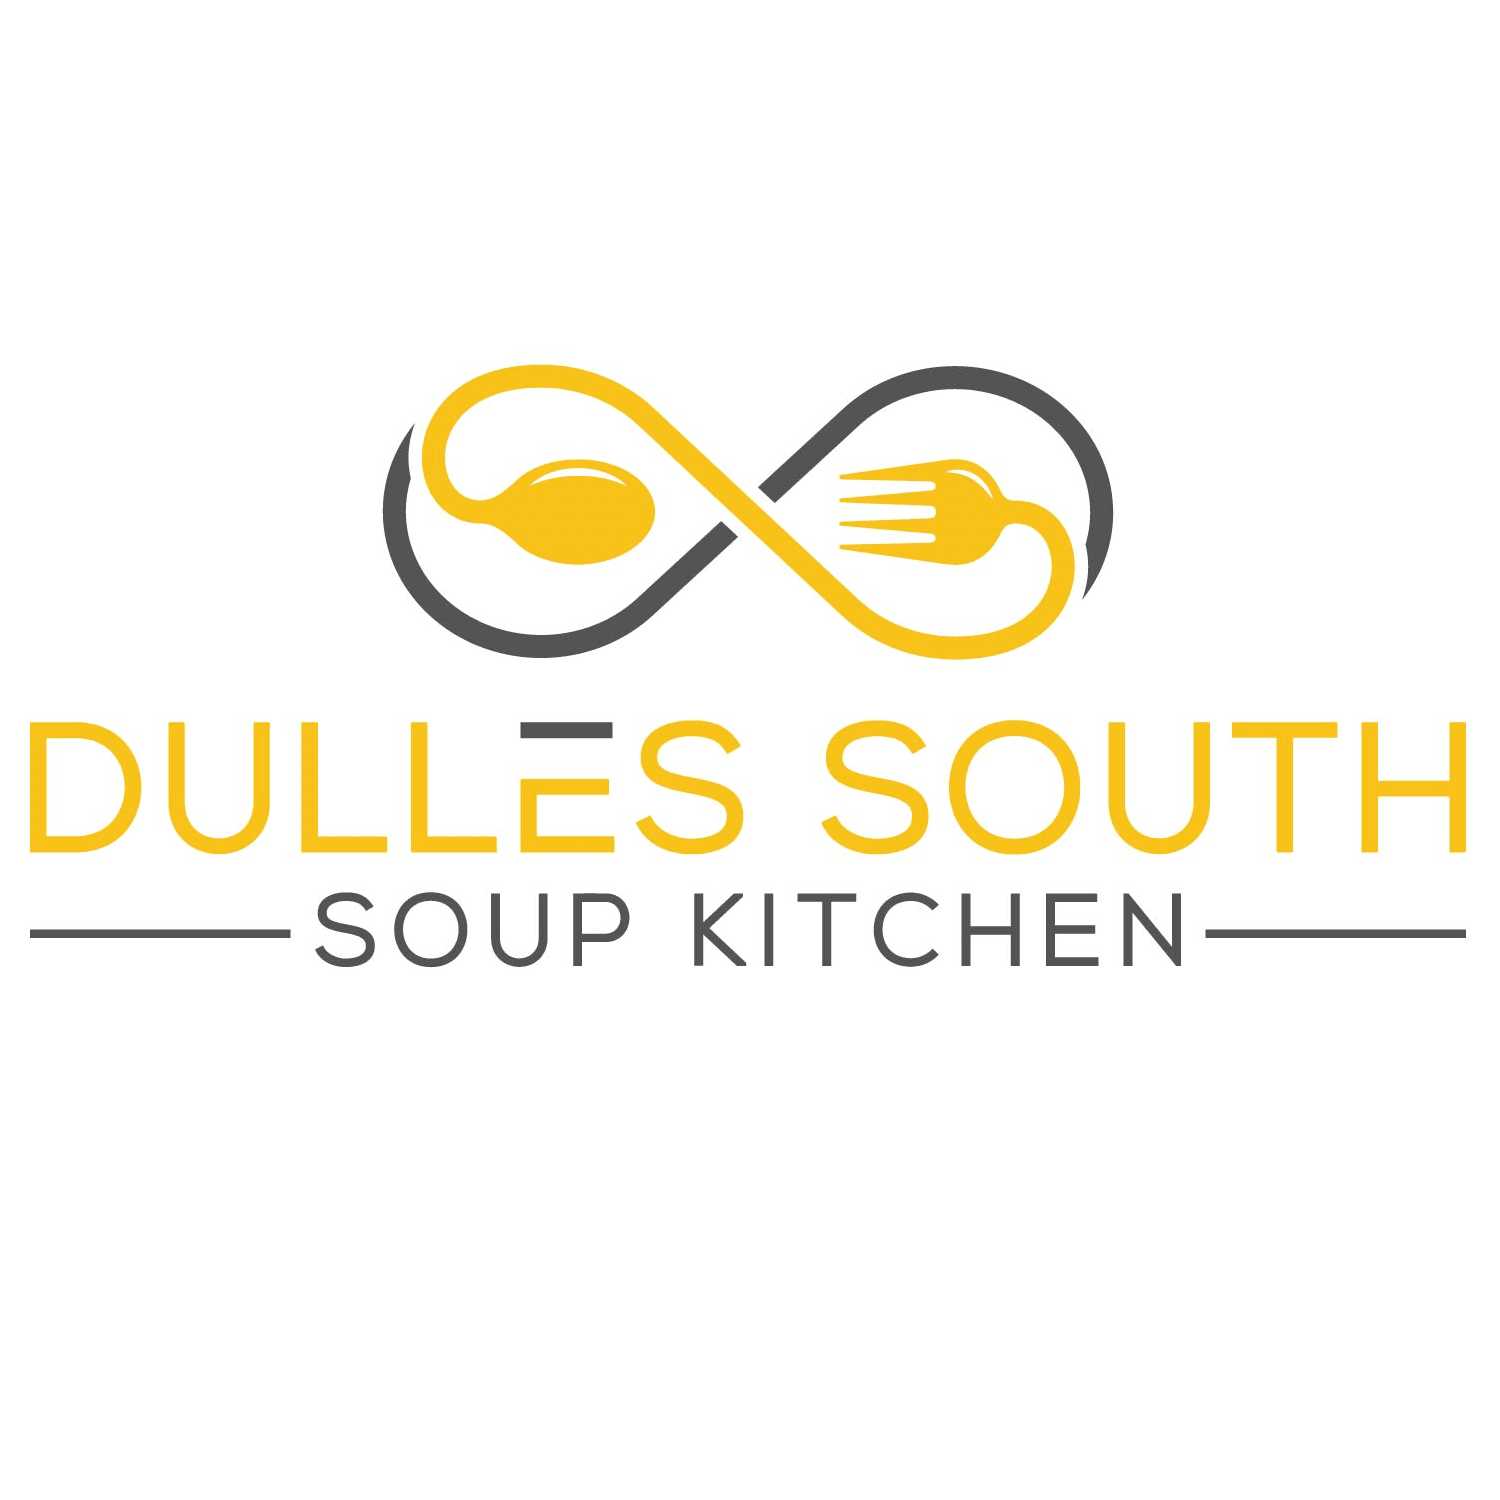 Dulles South Soup Kitchen